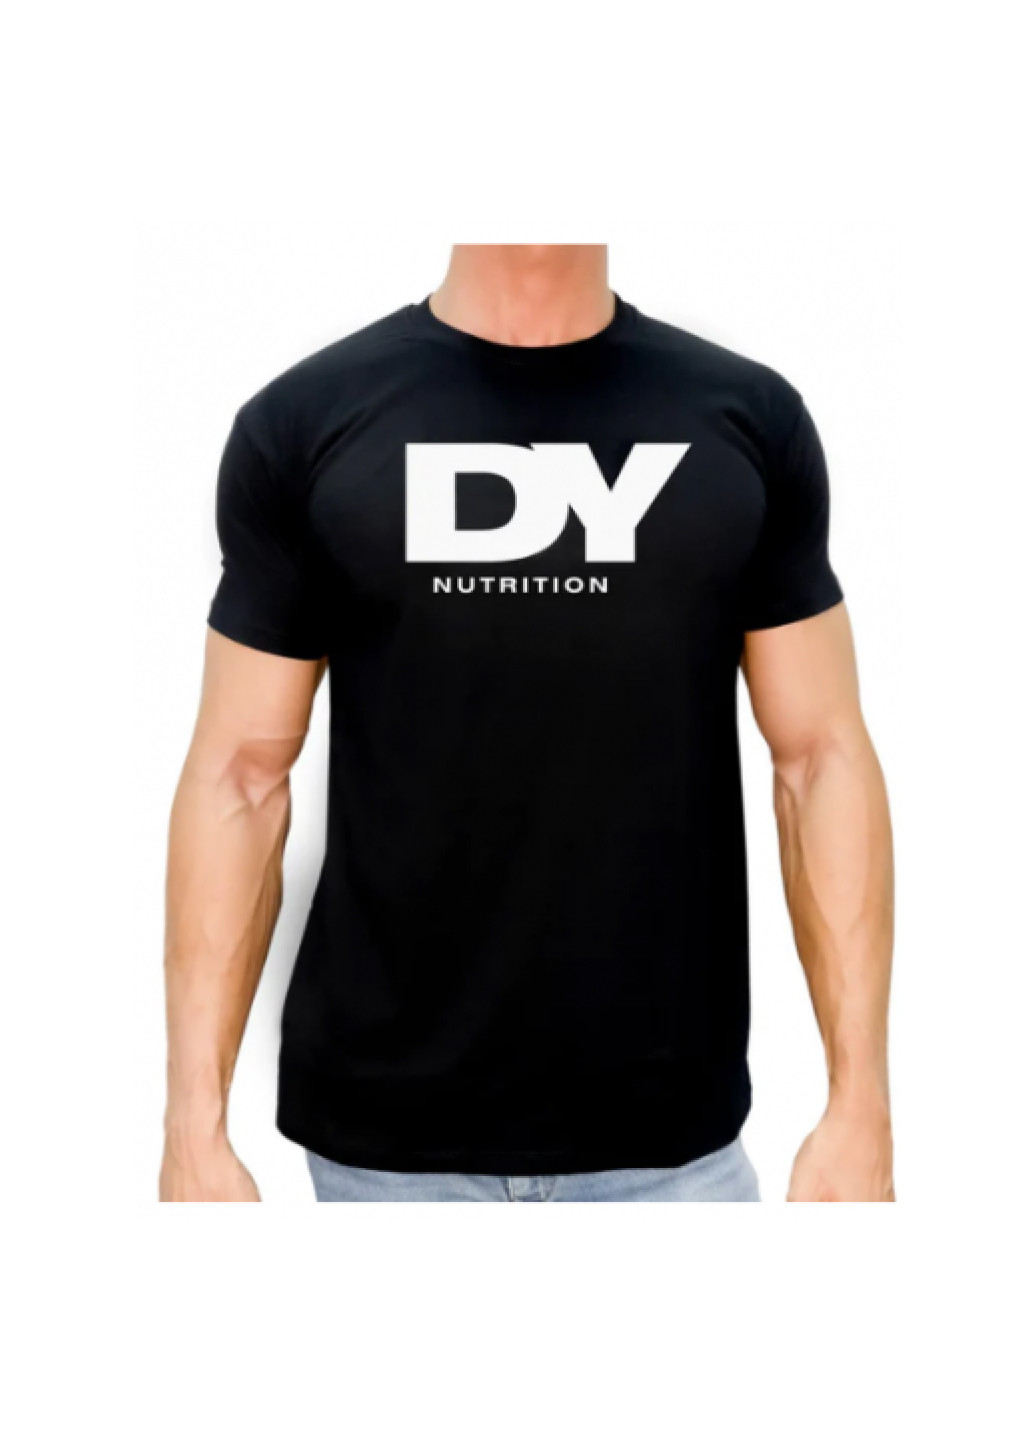 Черная футболка мужская l t-shirt imperial black- l DY Nutrition